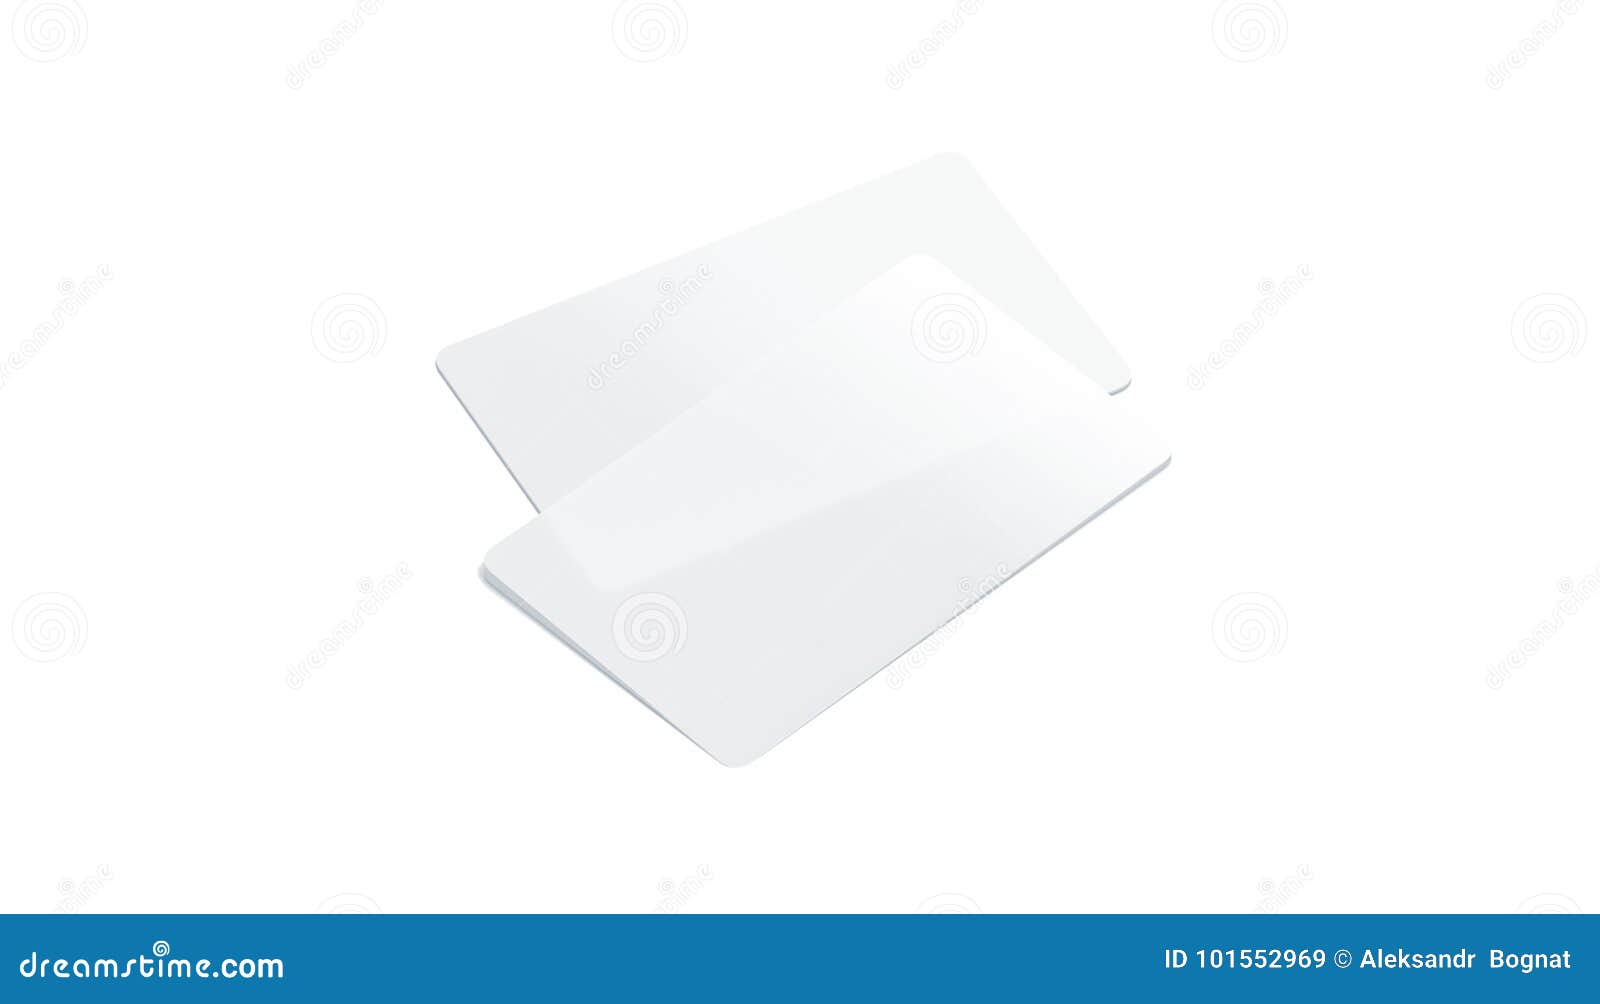 Blank Plastic Transparent Business Cards Mockup Stock Image With Transparent Business Cards Template